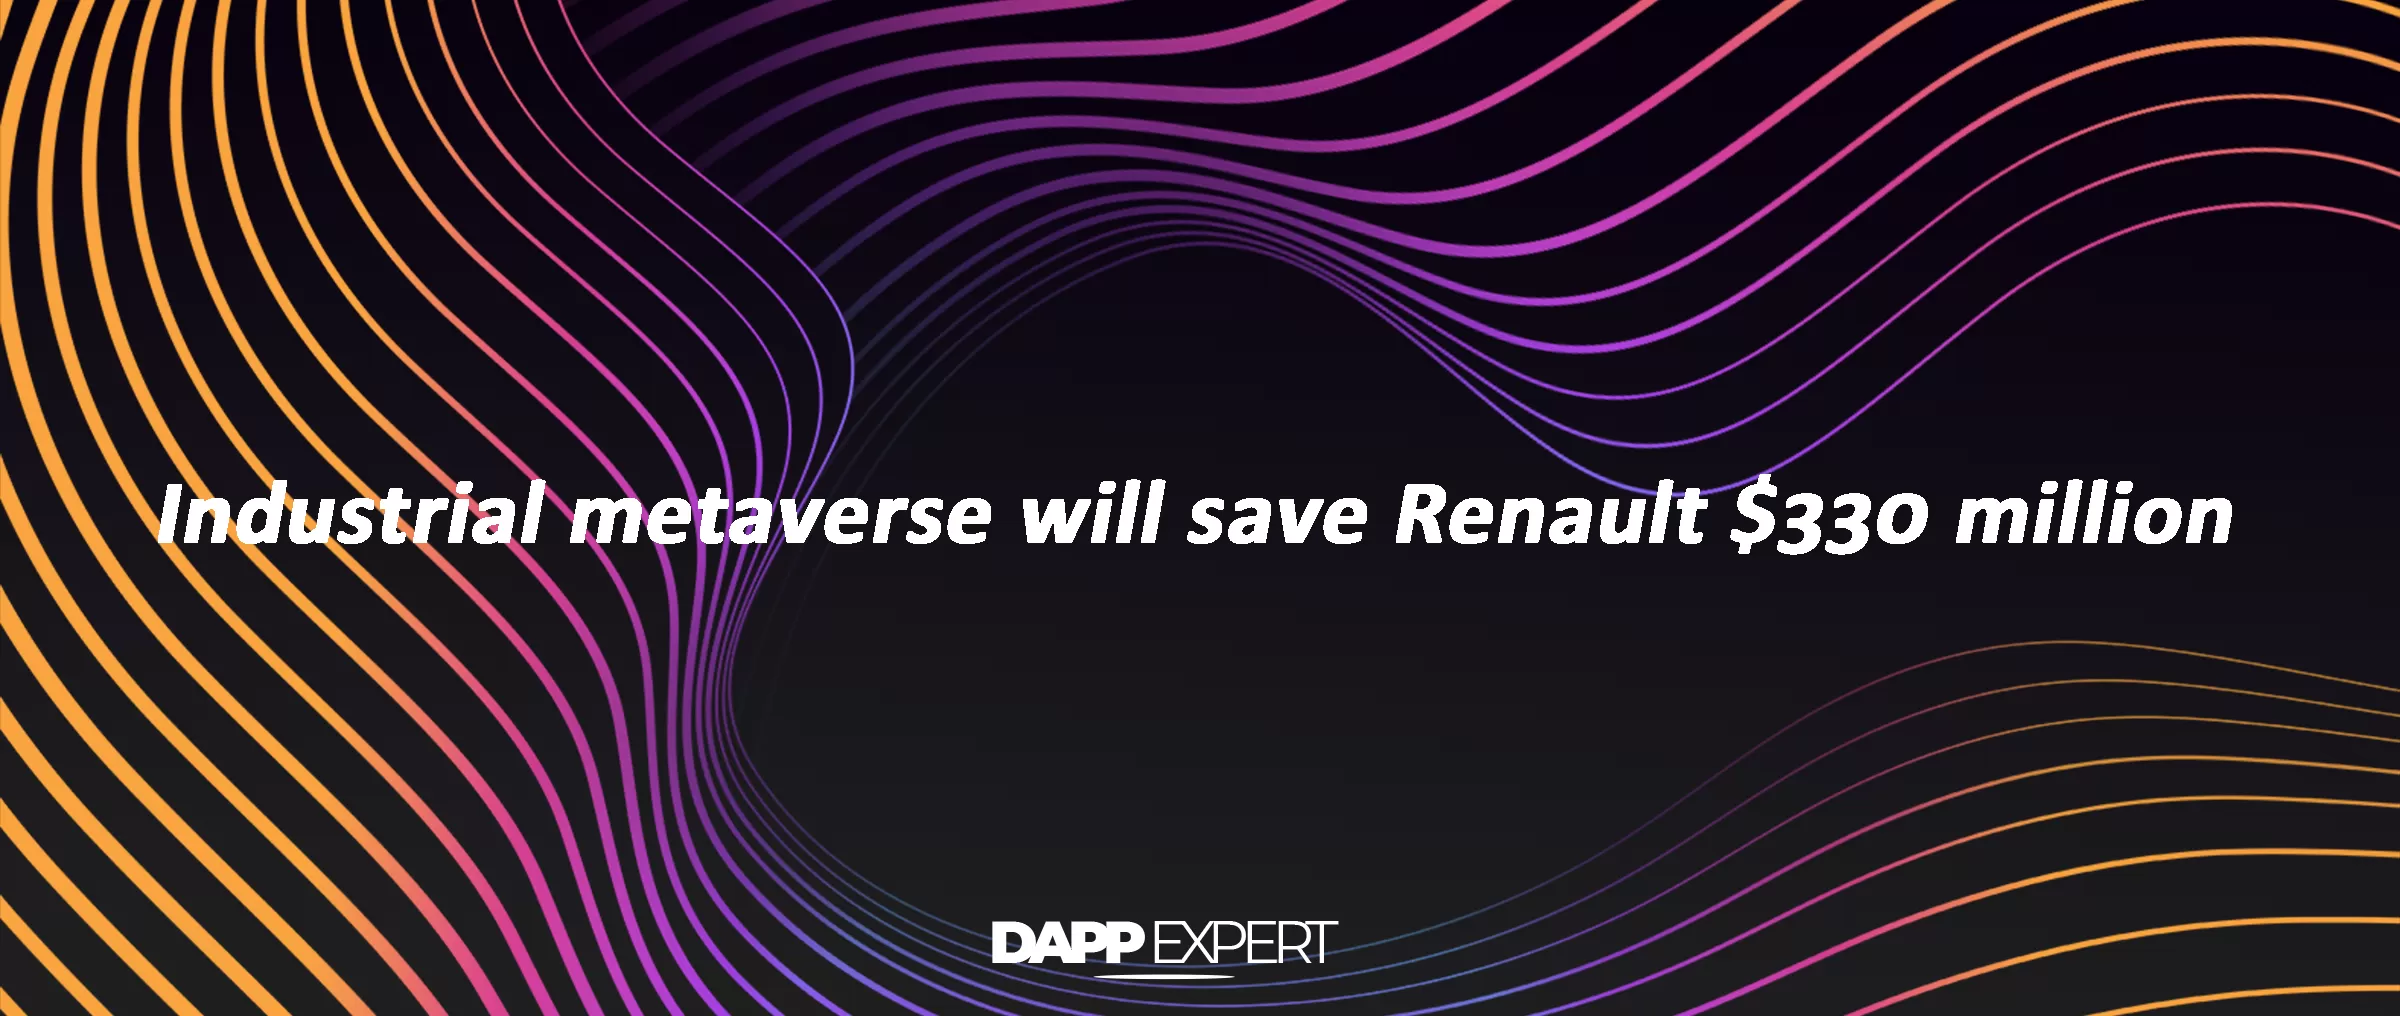 Industrial metaverse will save Renault $330 million